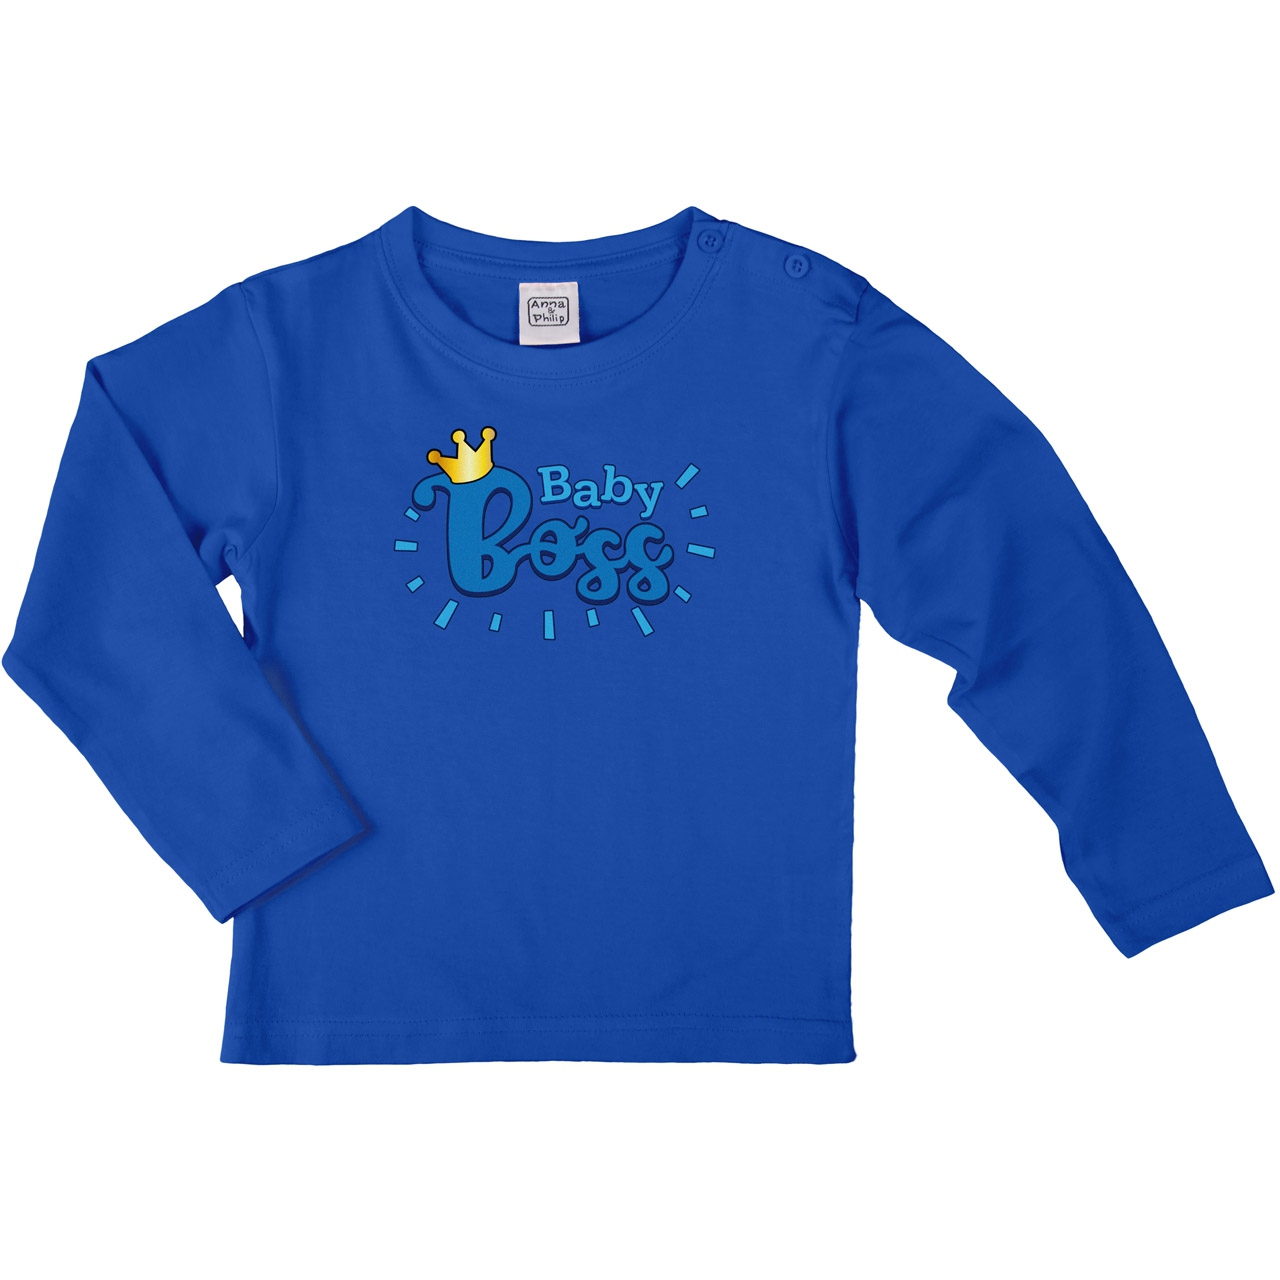 Baby Boss Blau Kinder Langarm Shirt royal 56 / 62